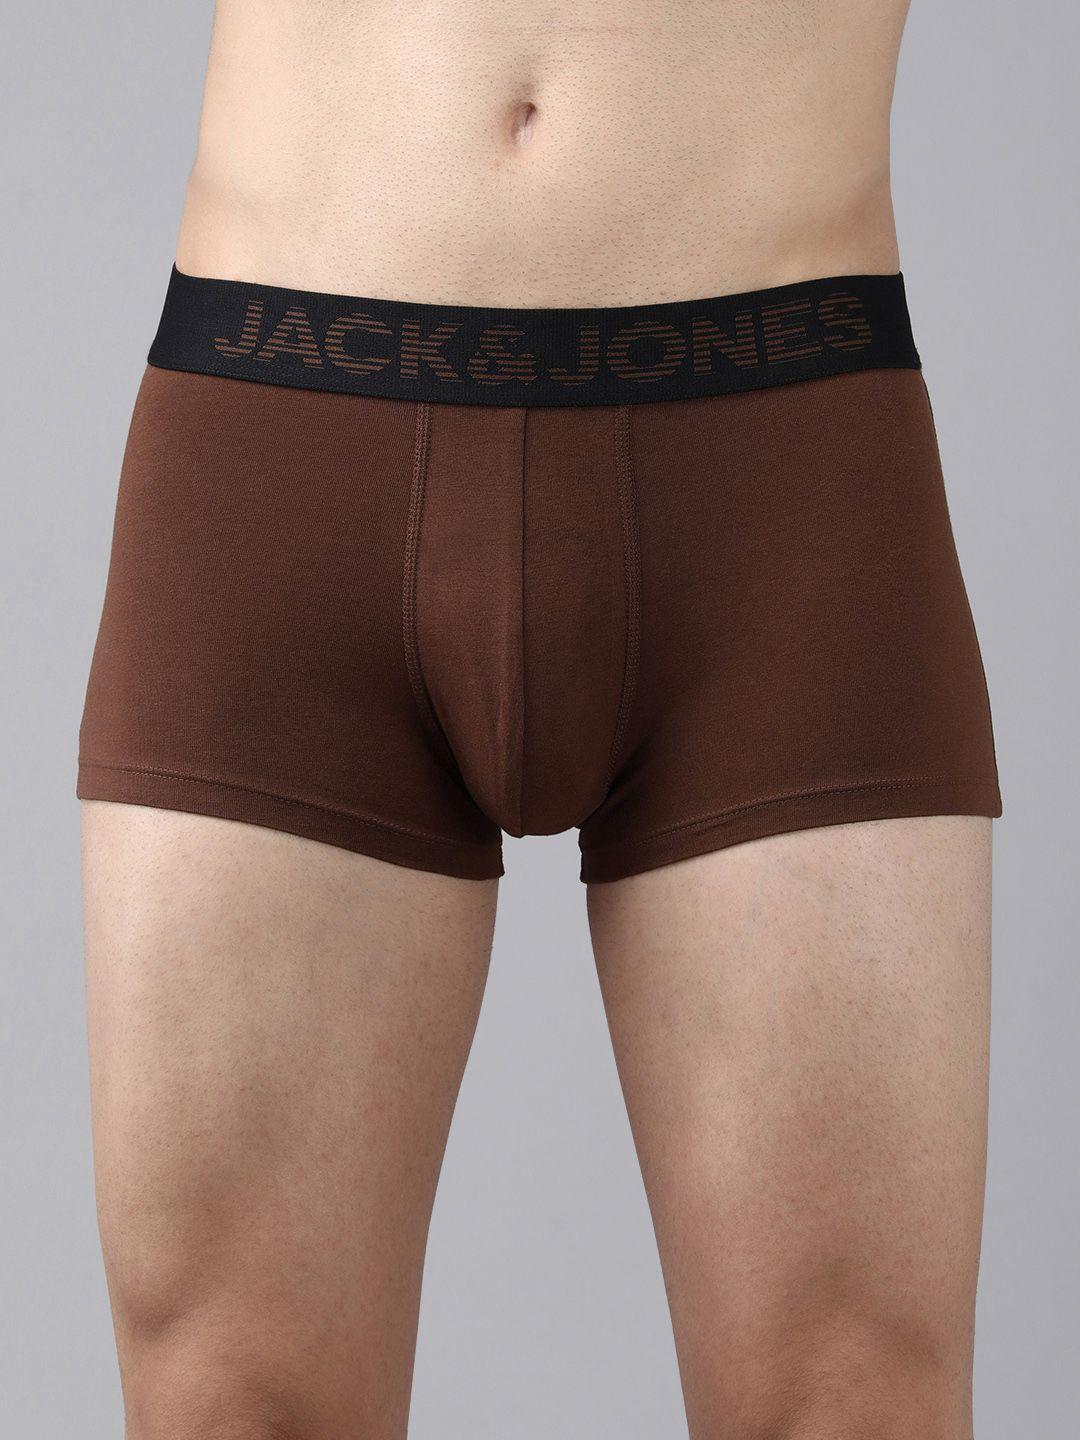 jack-&-jones-men-brown-solid-anti-microbial-trunk-1036691002